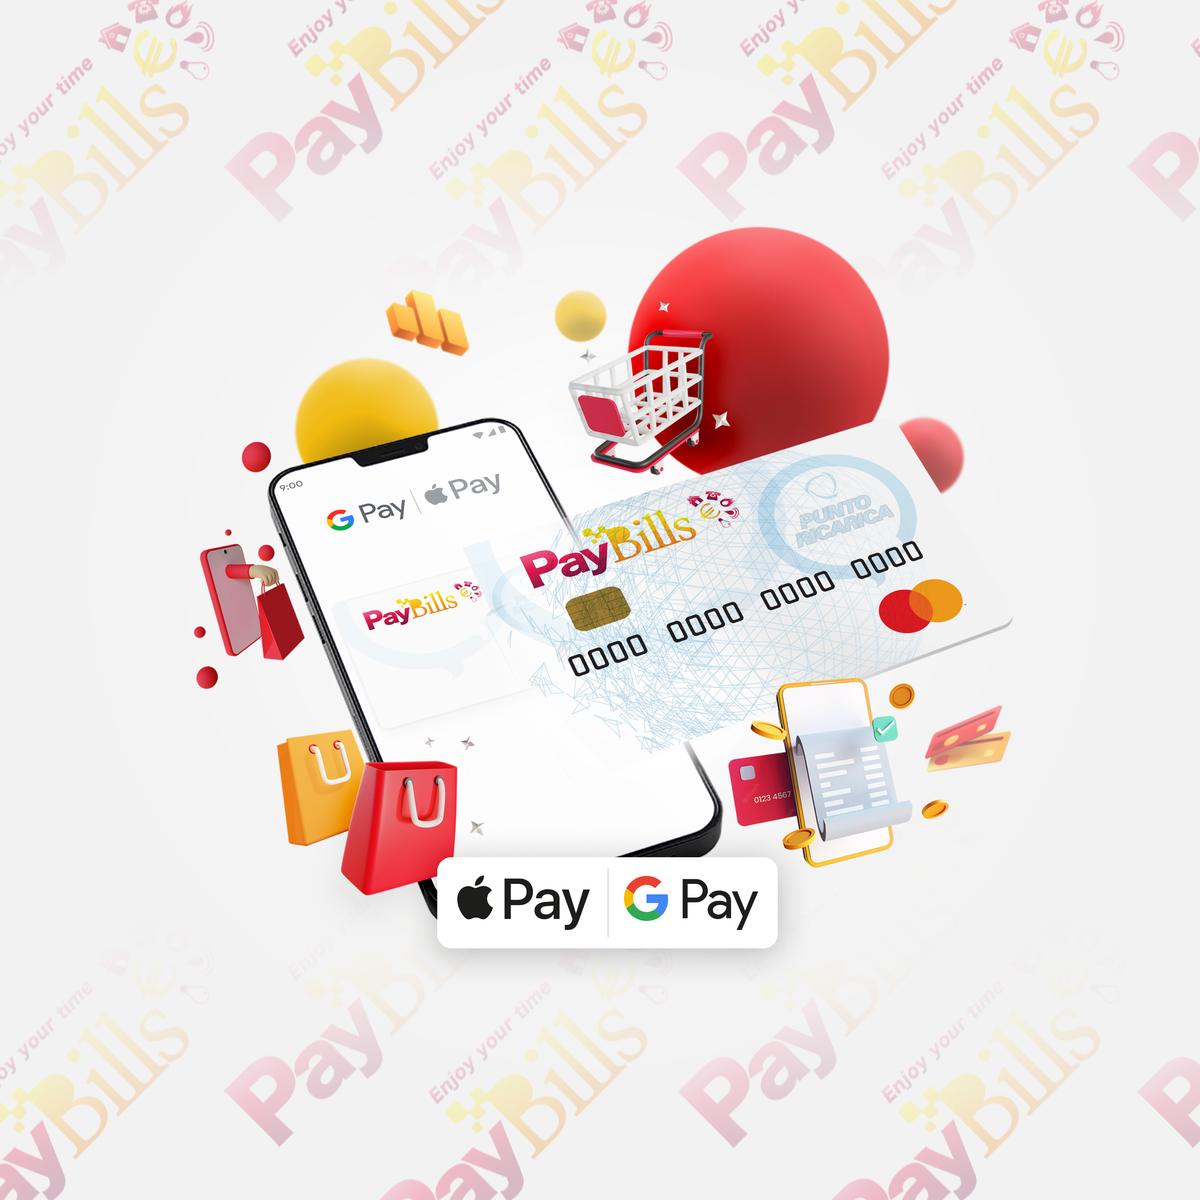 PayBills Virtual Card. Tap&Pay